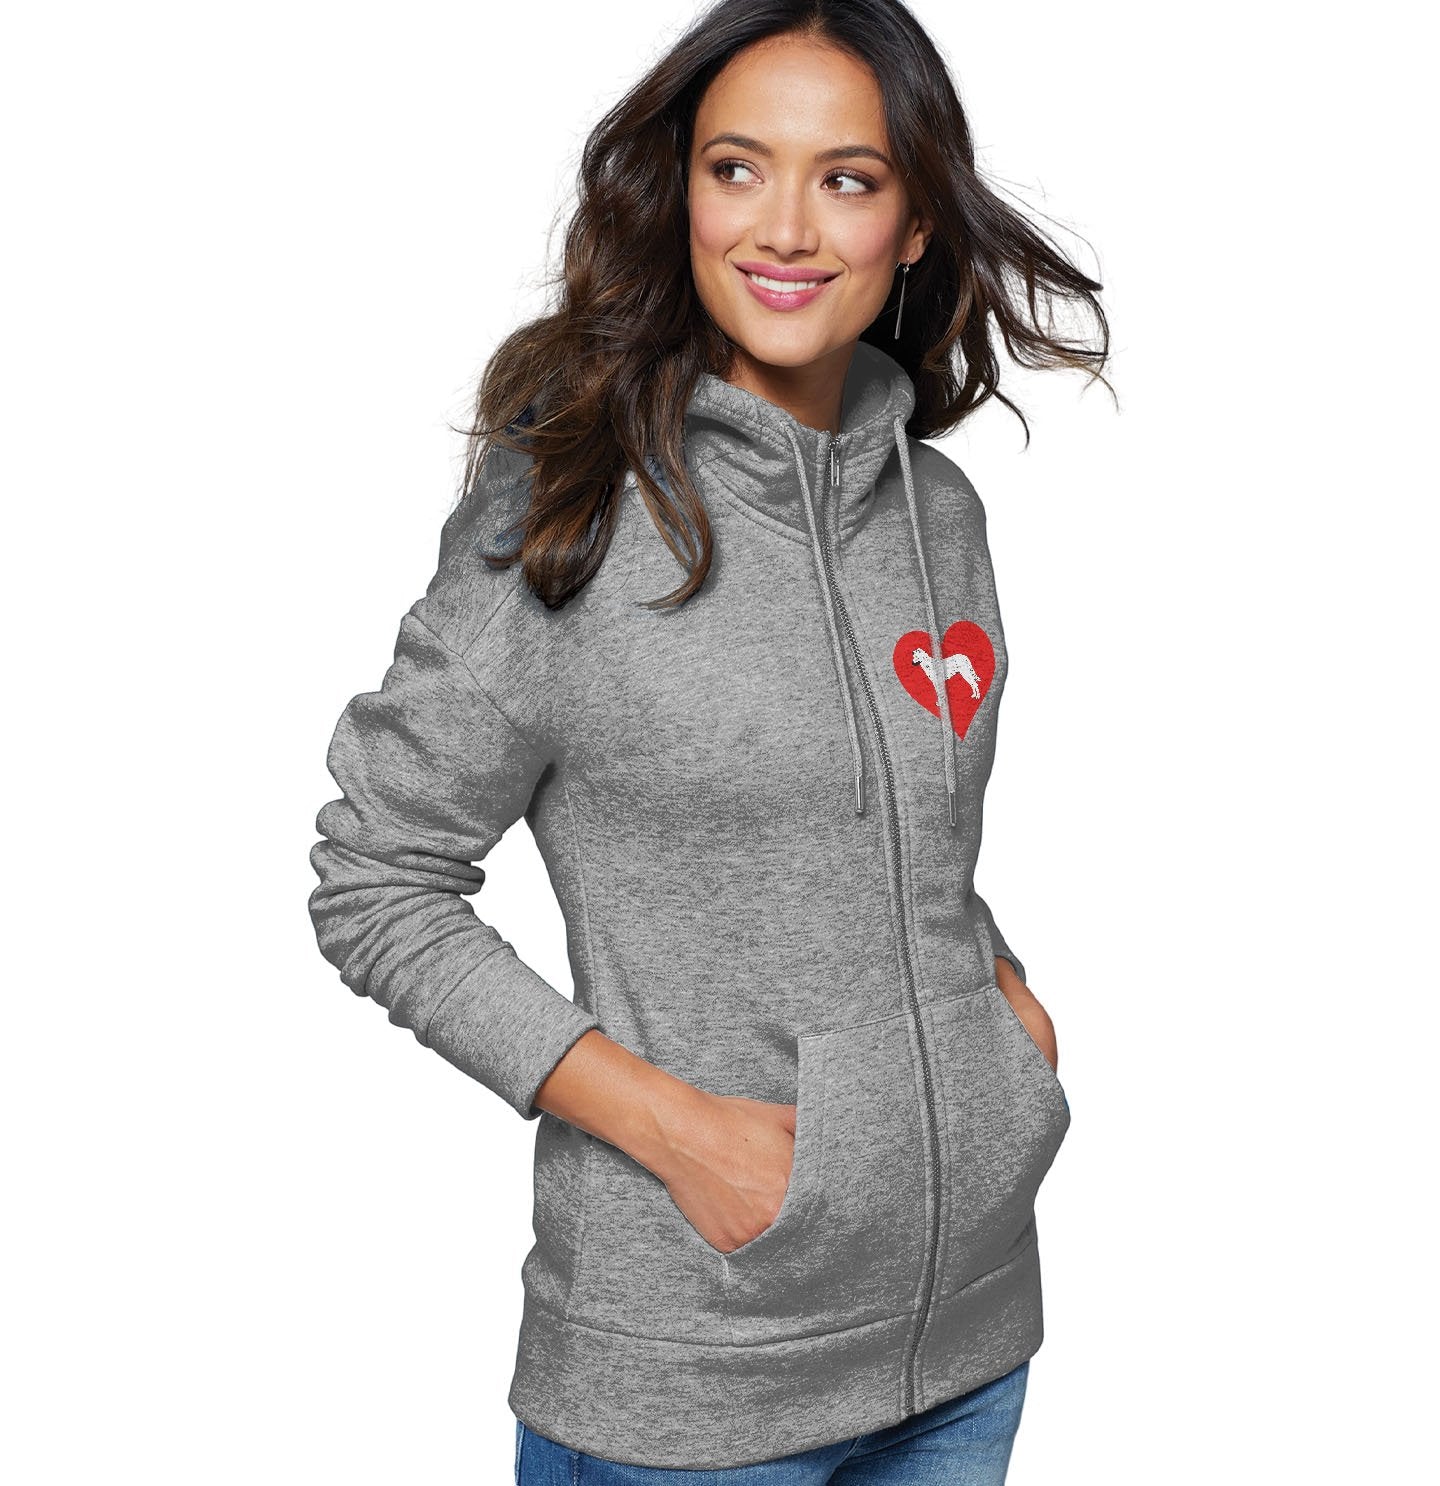 Chinook on Heart Left Chest - Women's Full-Zip Hoodie Sweatshirt